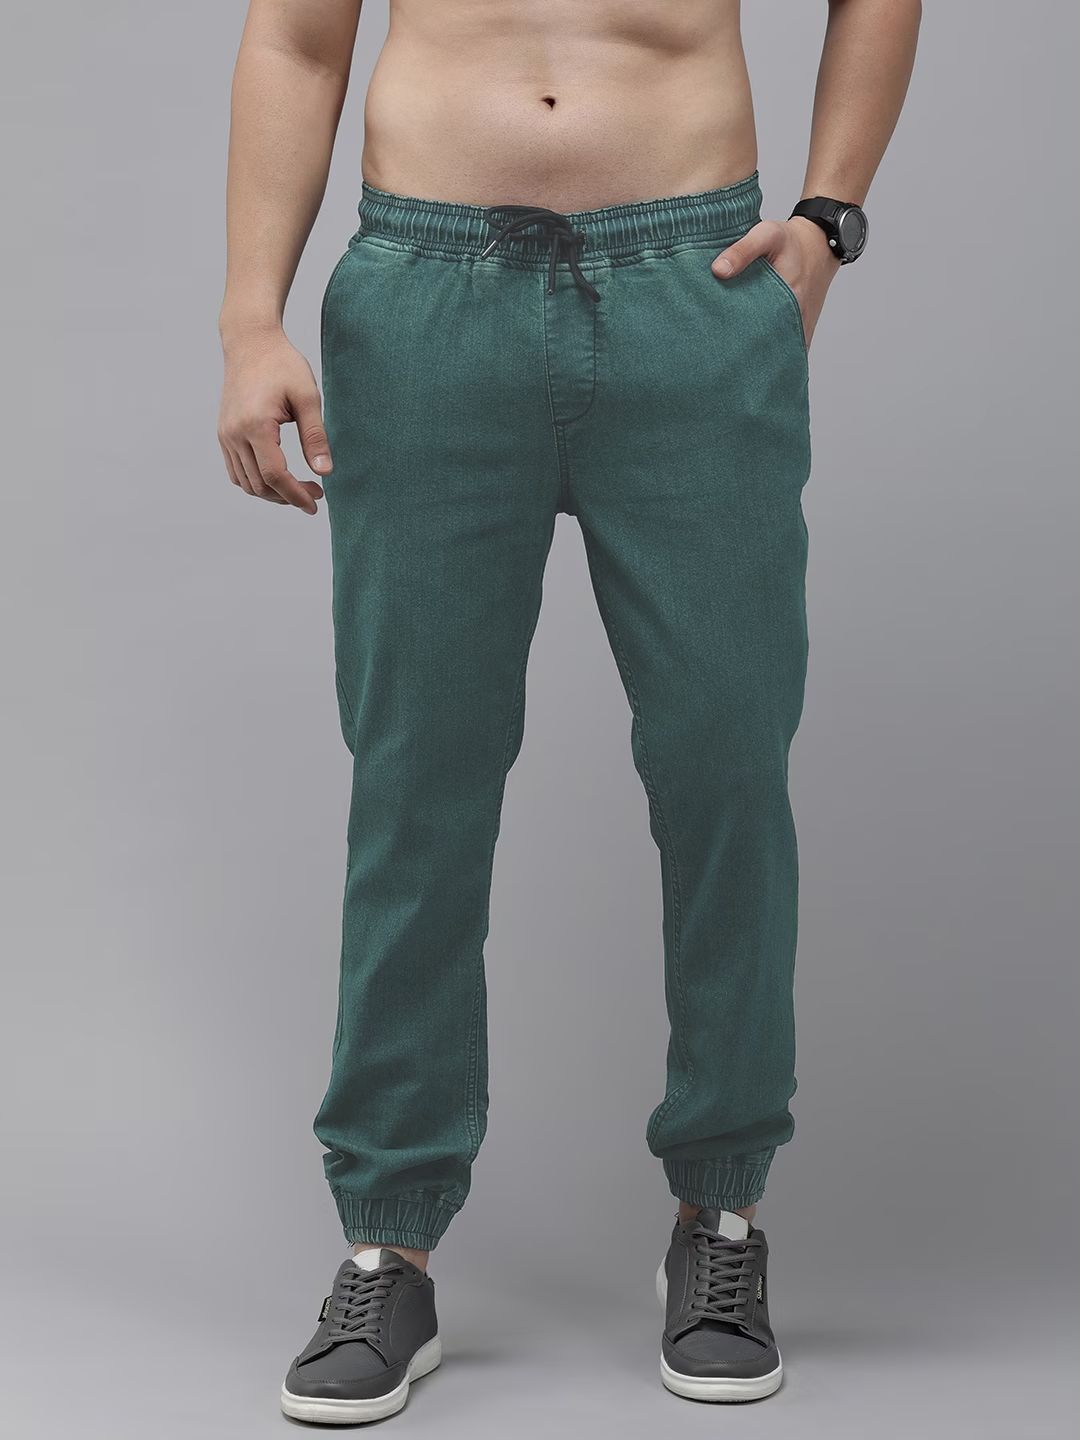 Men Green Dark Slim Fit Jeans